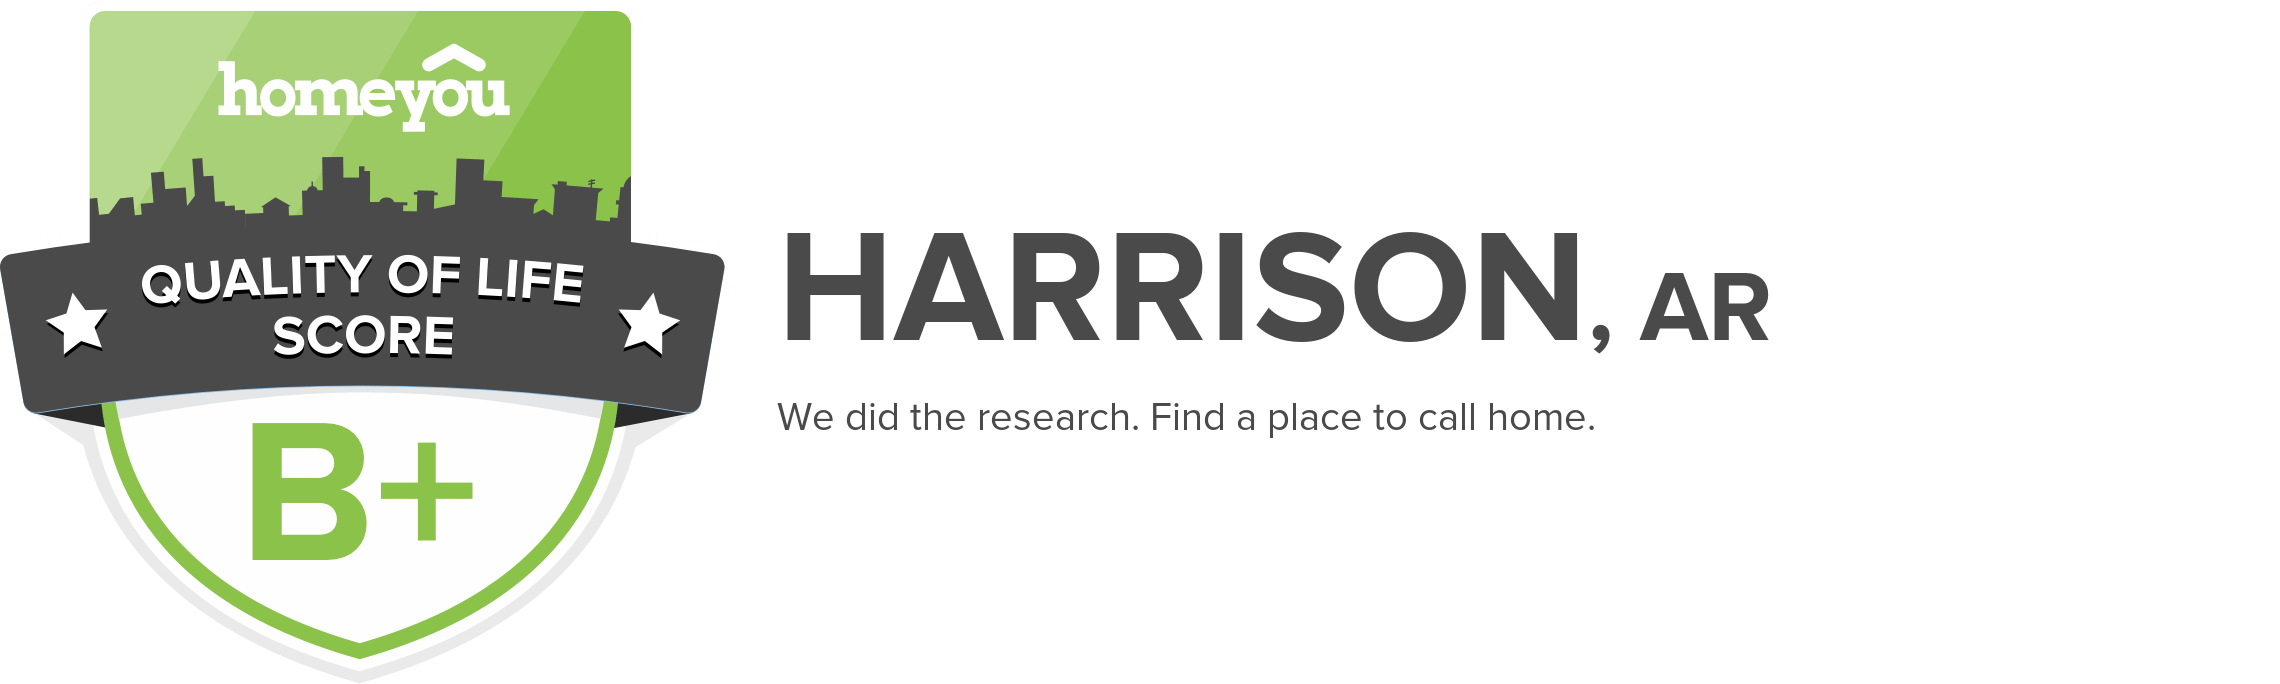 Harrison, AR